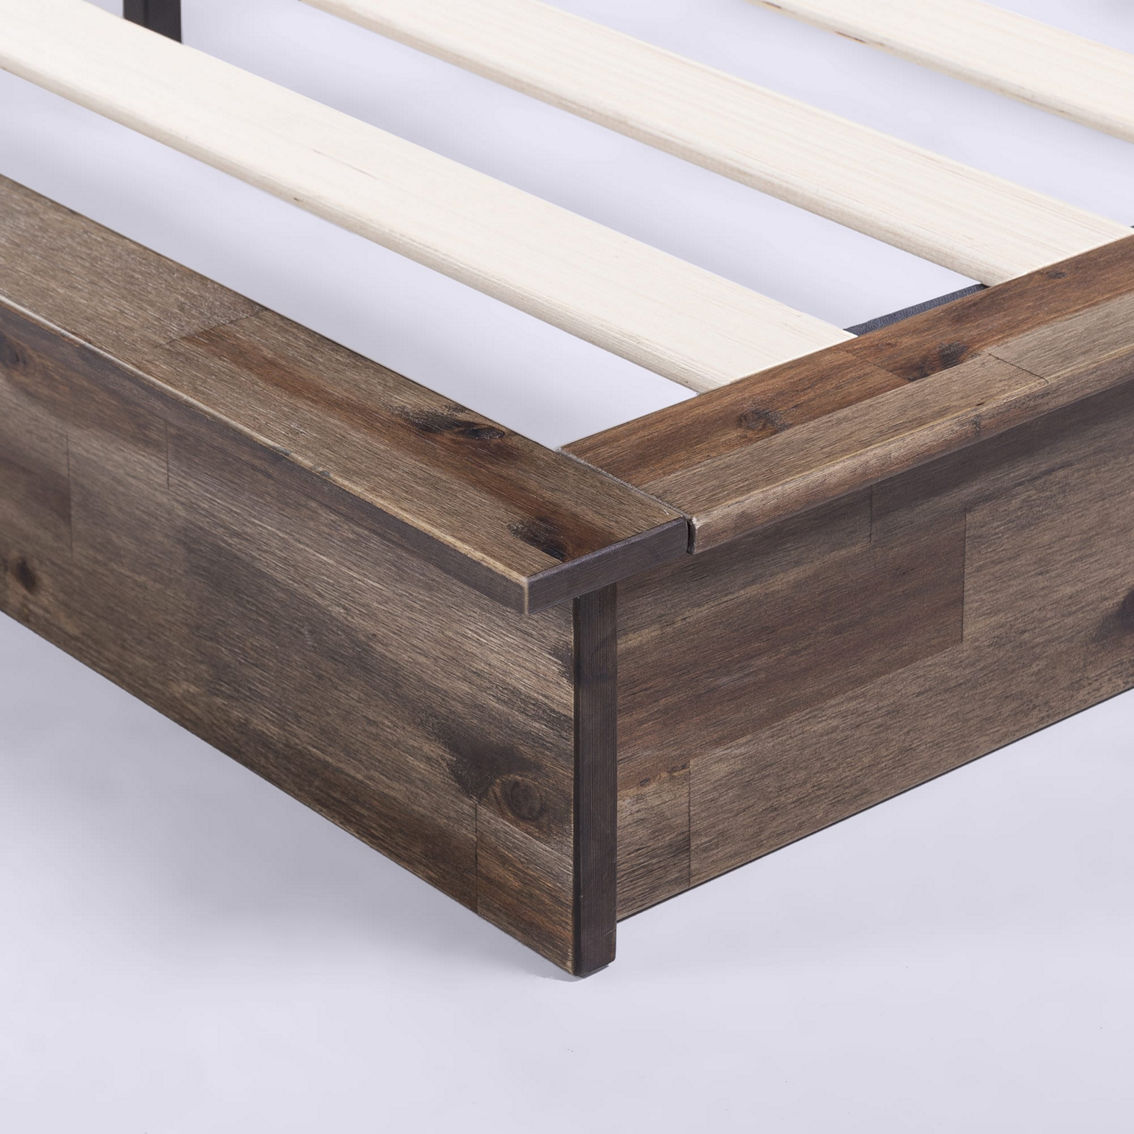 Zinus Metal & Wood Platform Bed - Image 4 of 4